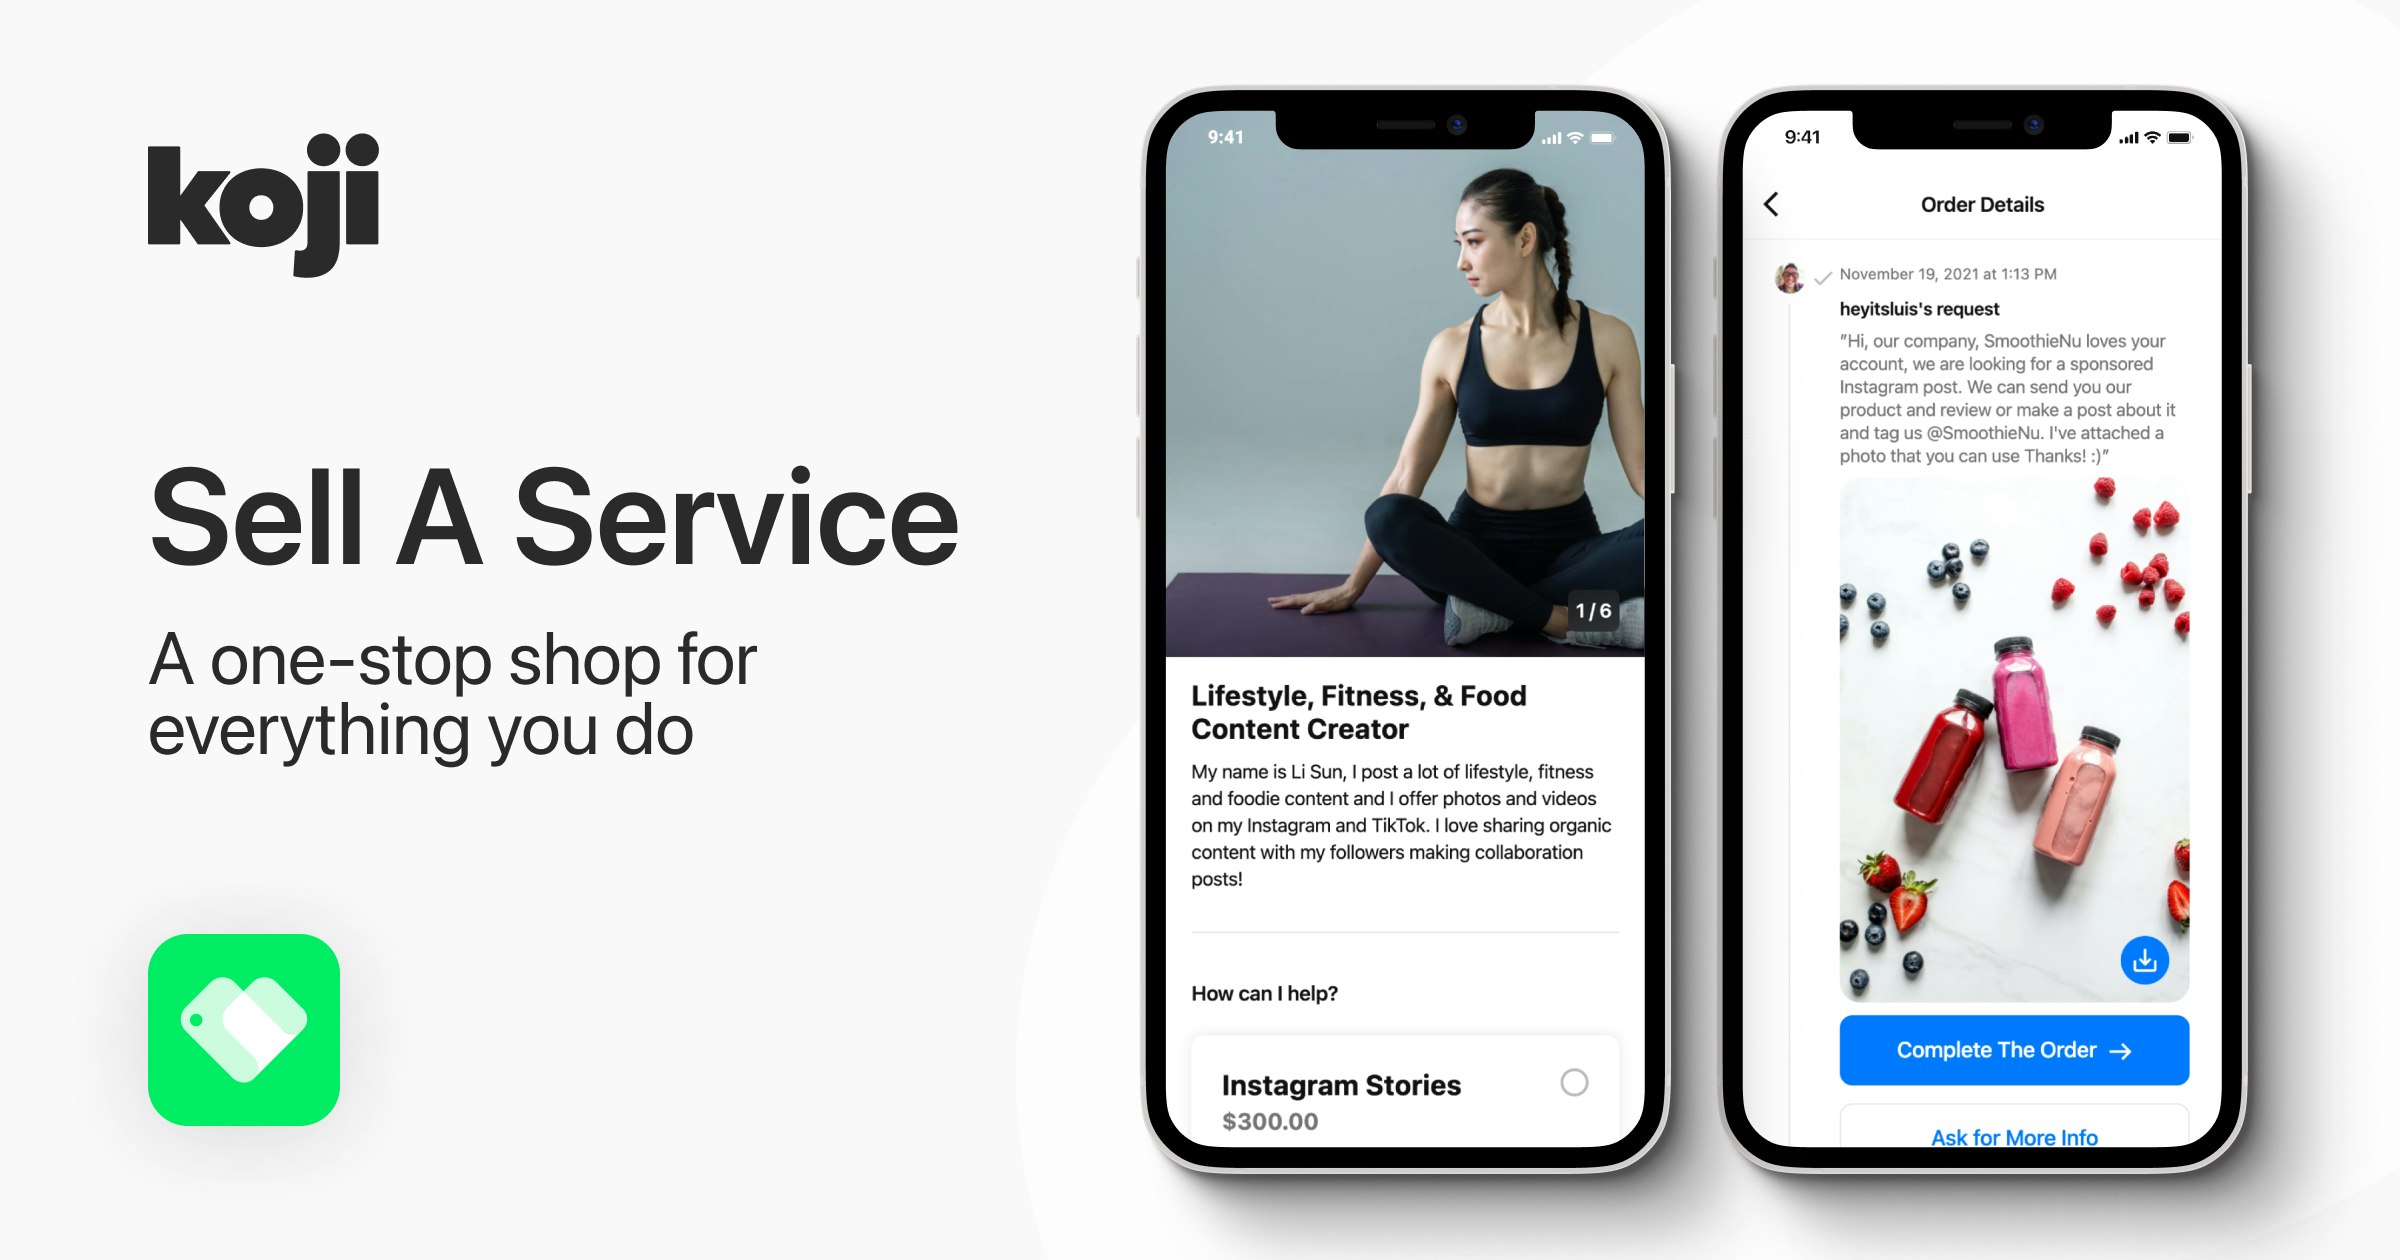 Creator Economy Platform Koji Announces “Sell a Service” App